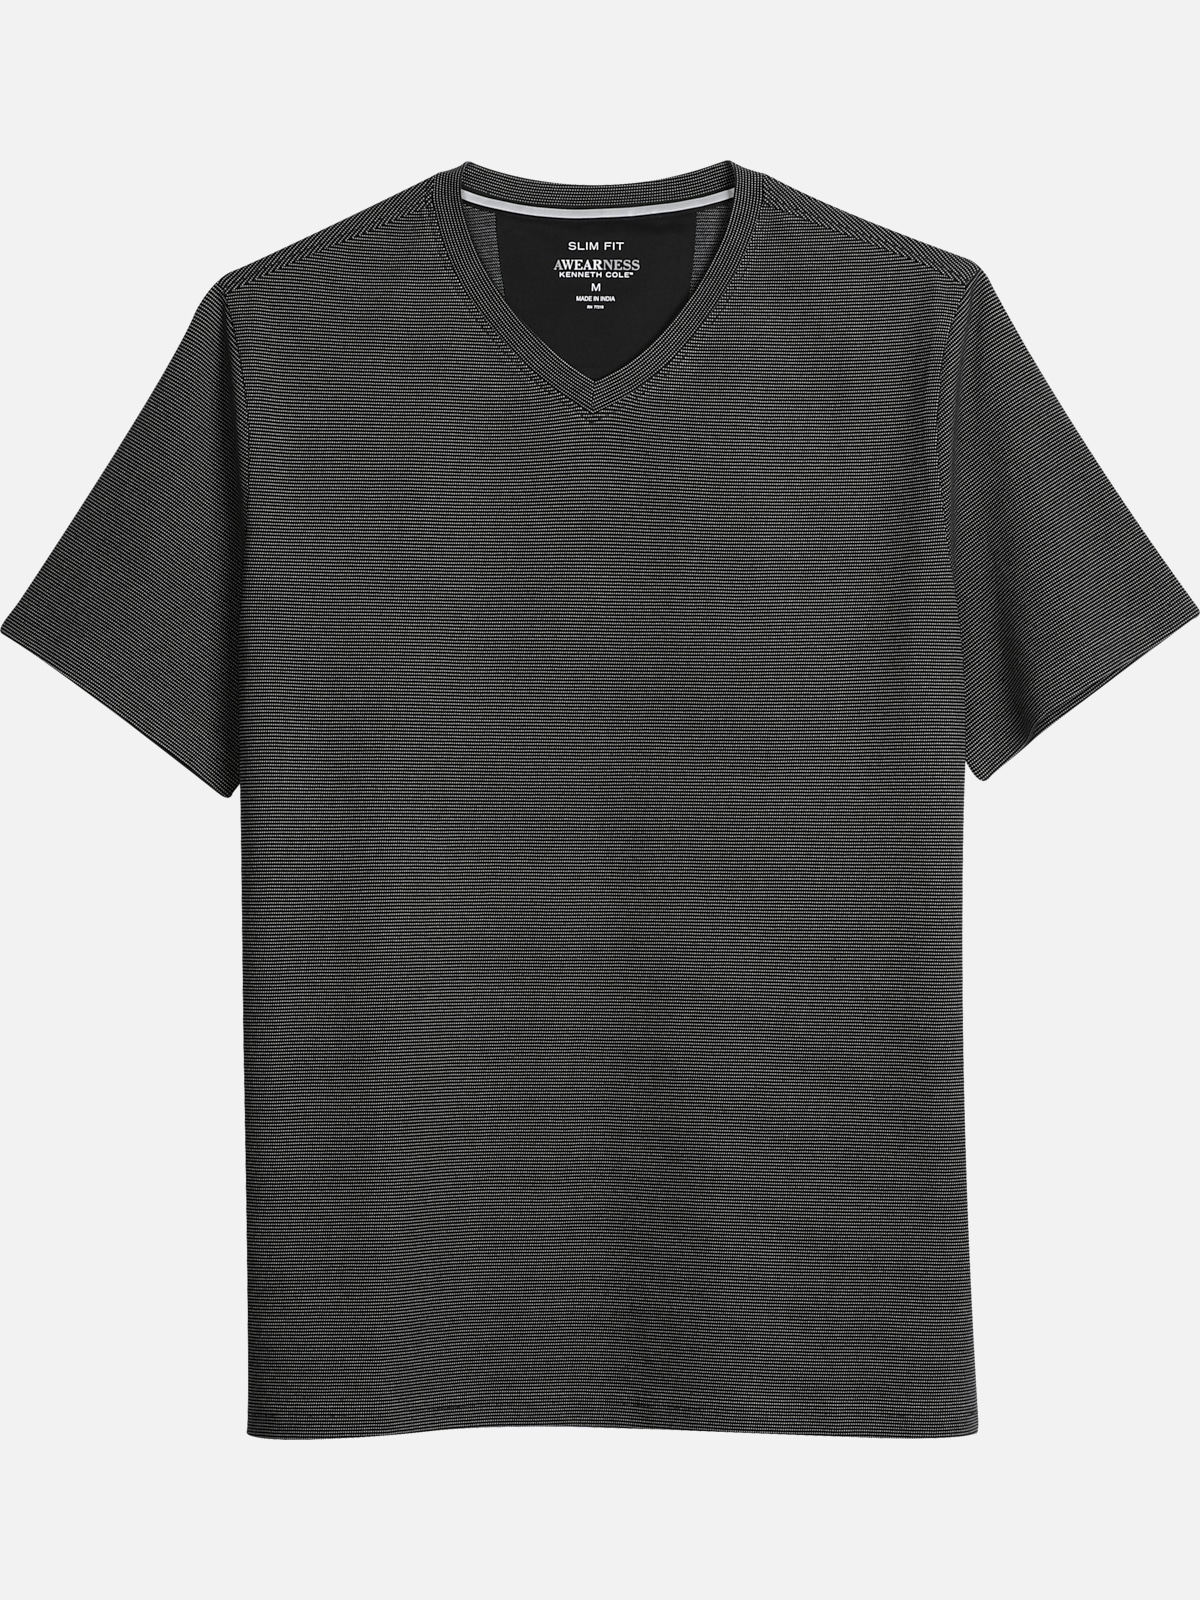 Awearness Kenneth Cole Slim Fit V-Neck Jacquard T-Shirt | All Sale| Men ...